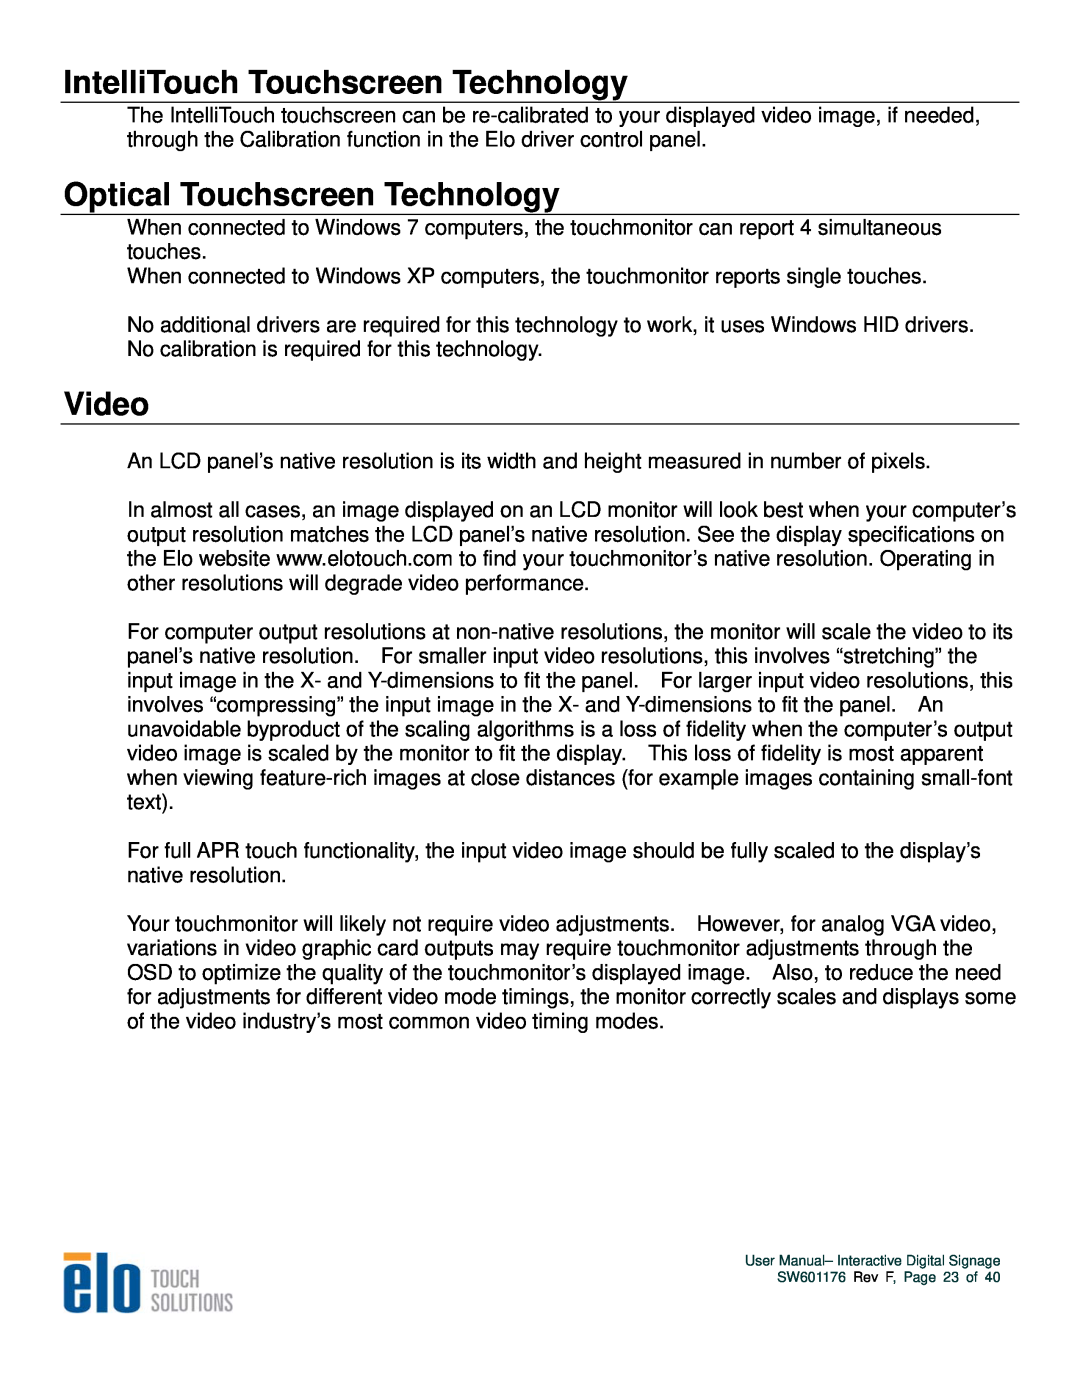 Elo TouchSystems 3200L, 4600L, 5500L, 4200L IntelliTouch Touchscreen Technology, Optical Touchscreen Technology, Video 